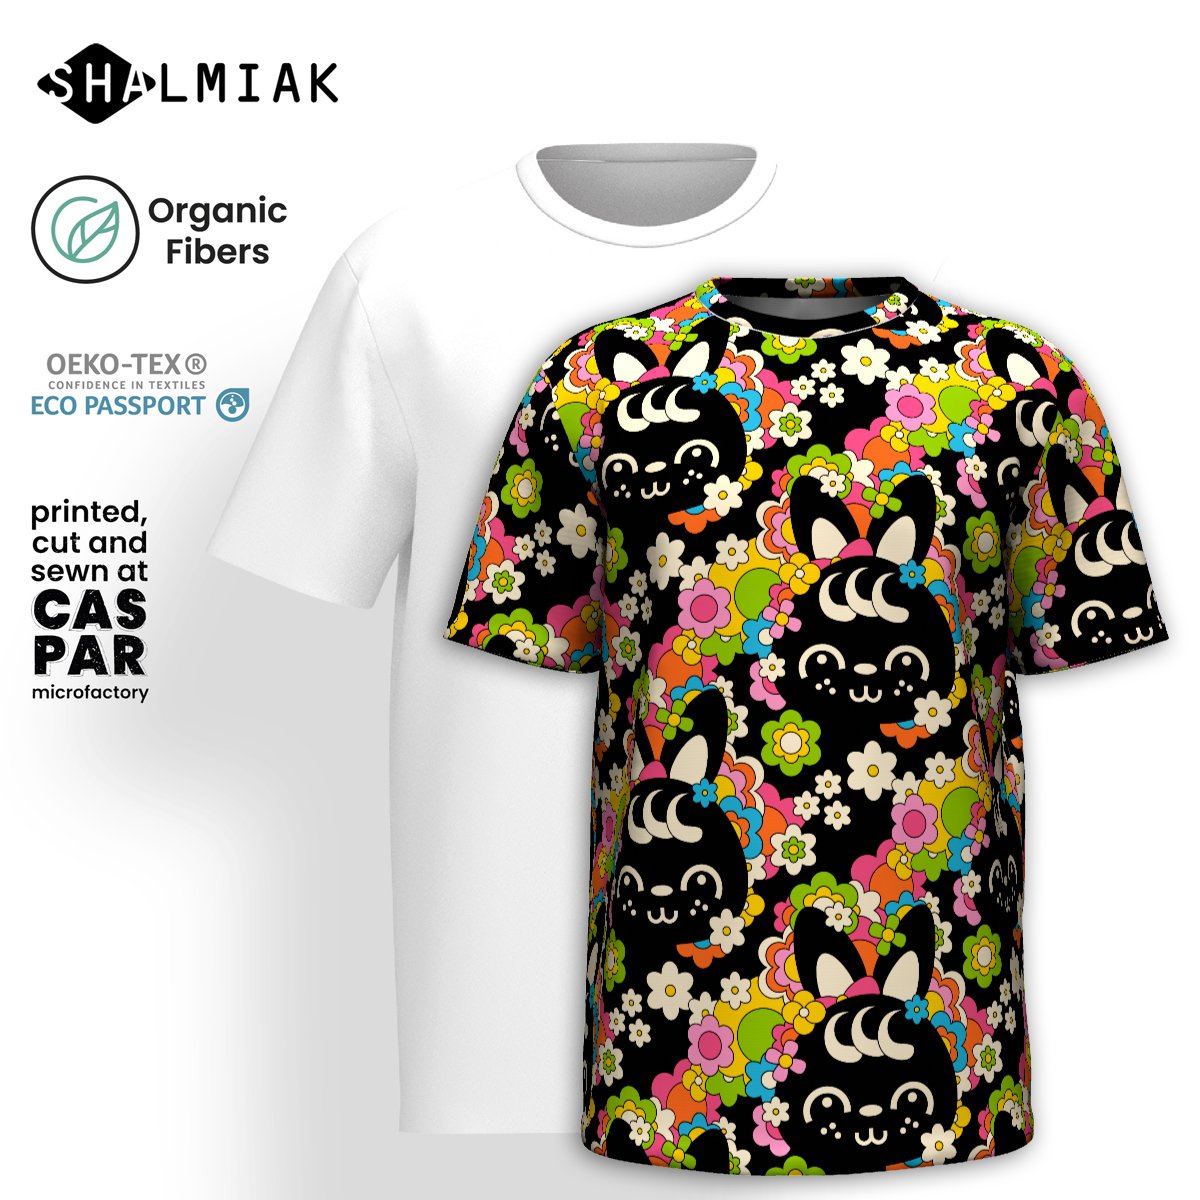 POPBUNNY black - T-shirt (organic cotton) - SHALMIAK